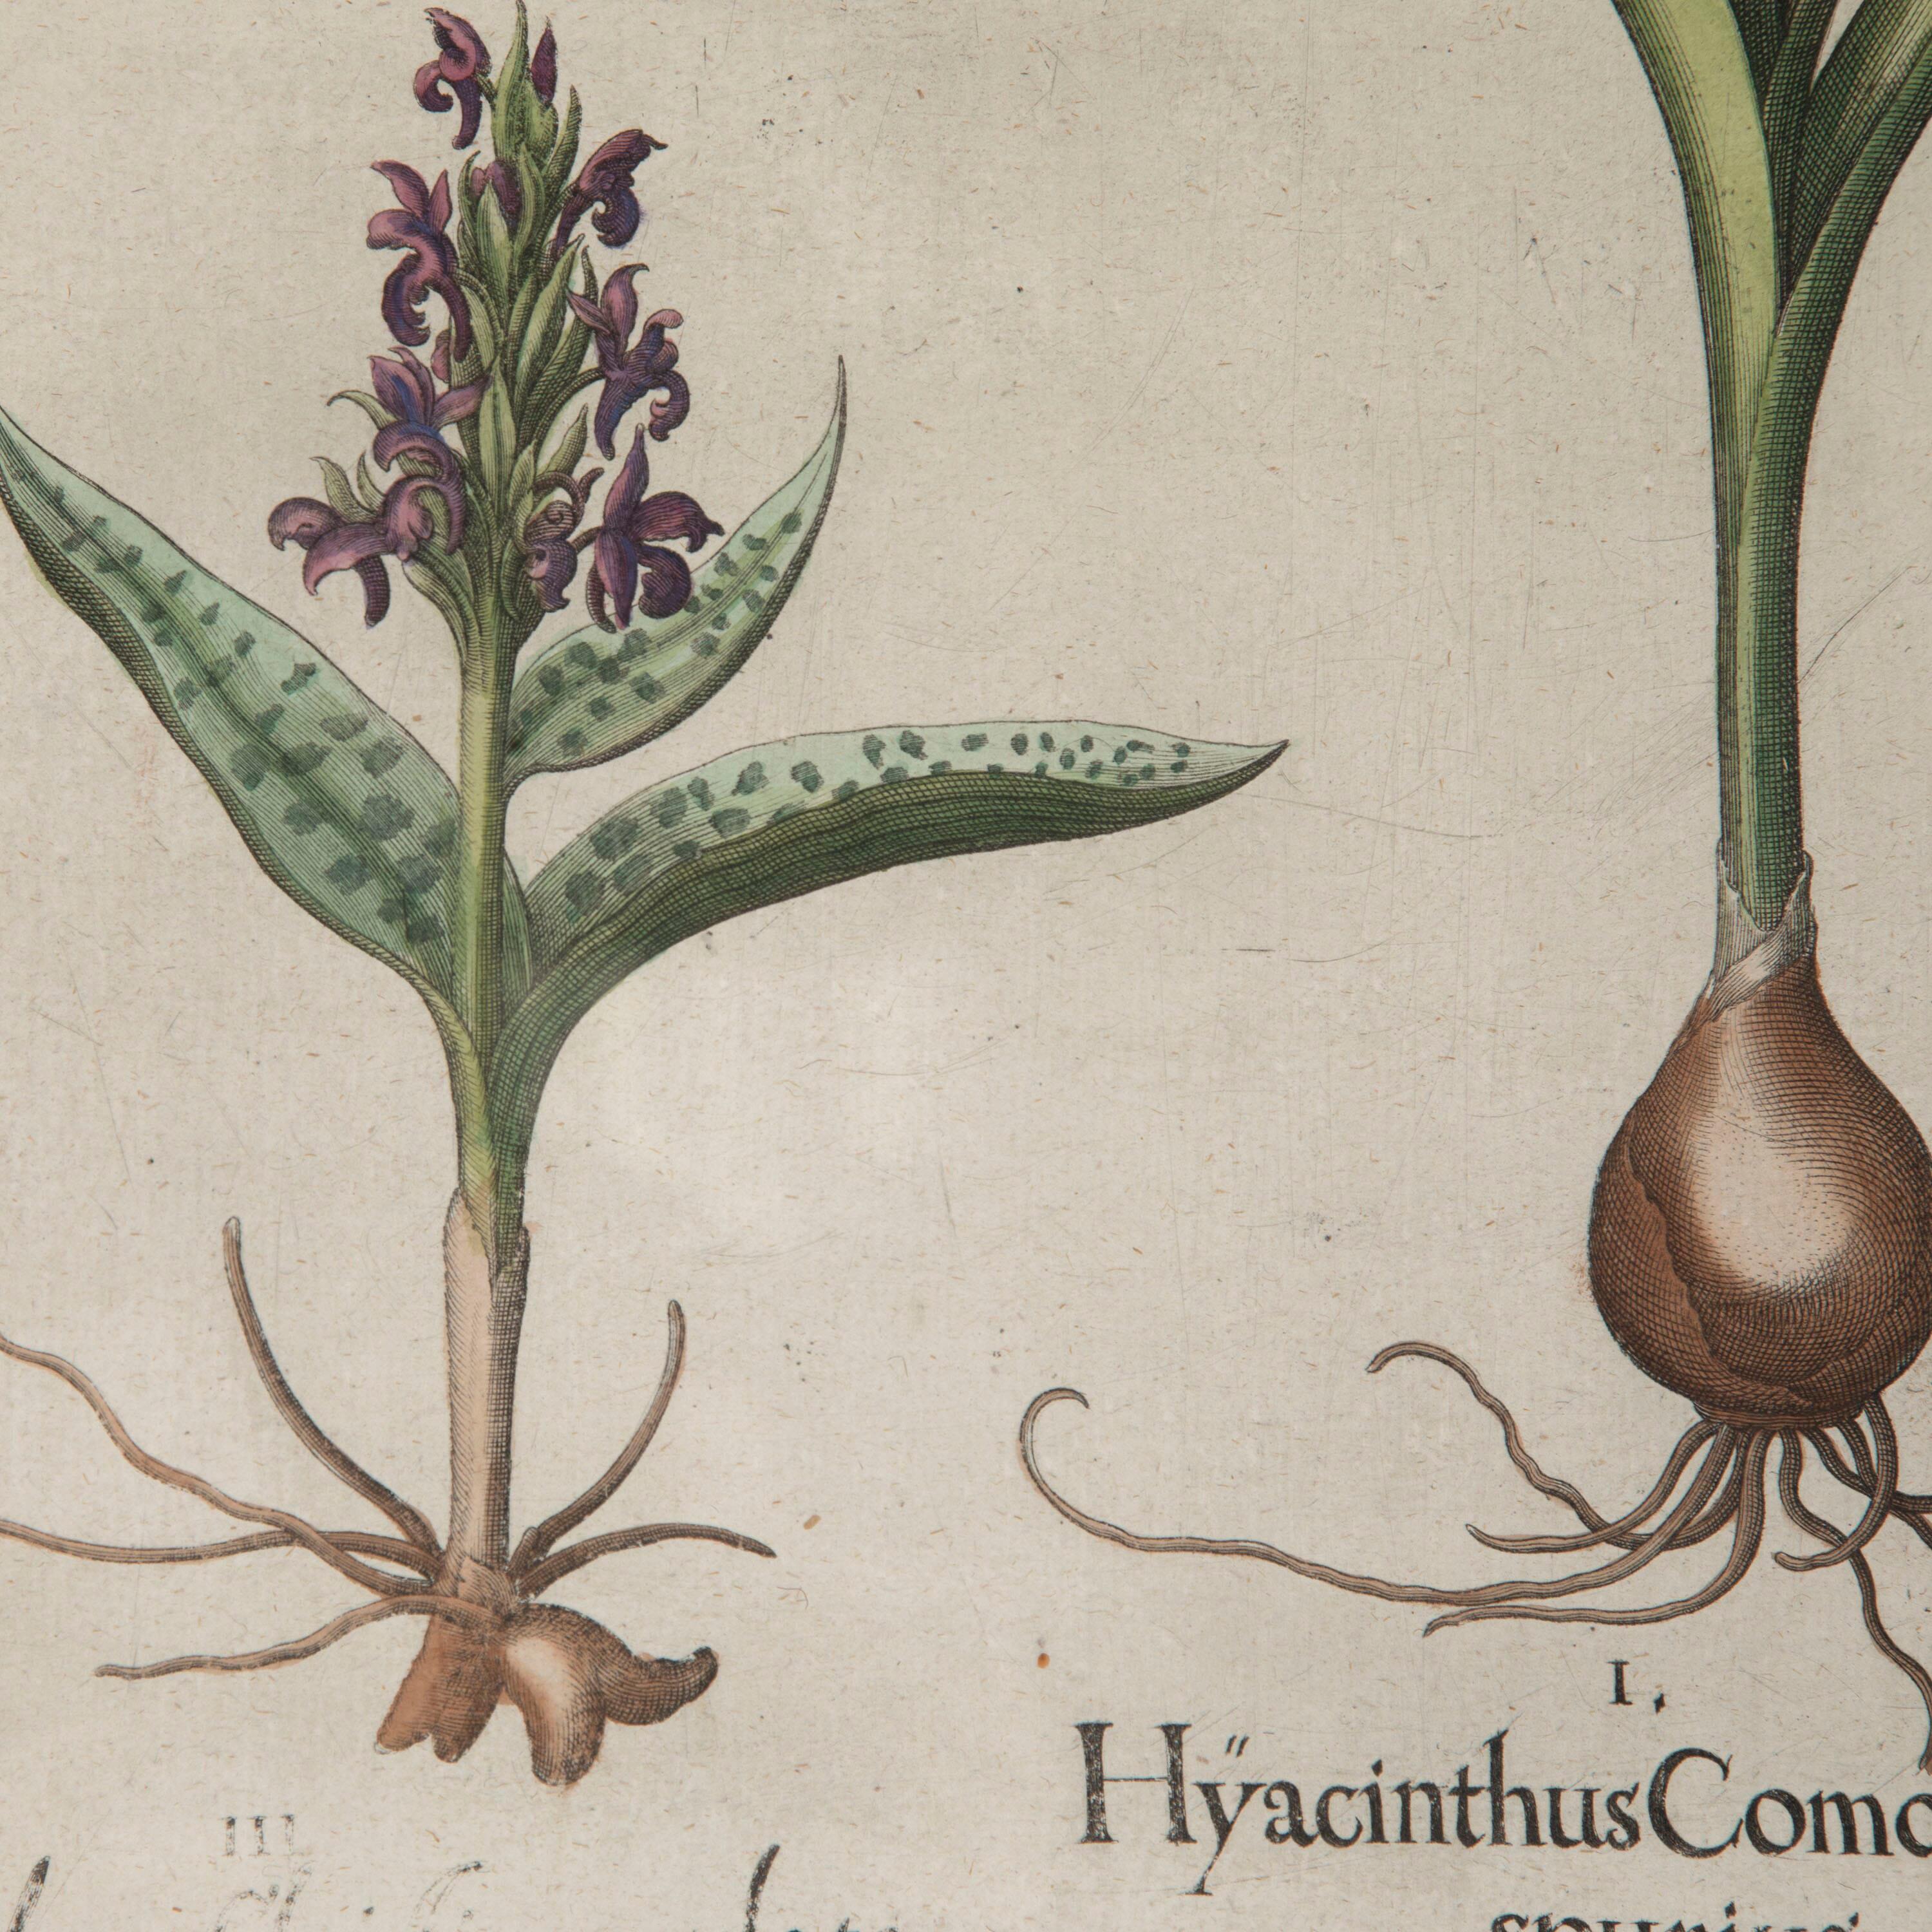 Stunning 17th century Hyacinth botanical engraving, by Basilius Besler. 

Basilius Besler (1561-1629) was a prominent botanist and apothecarist in Nuremberg. He was tasked with curating the garden of Johann Konrad von Gemmingen, the Prince Bishop